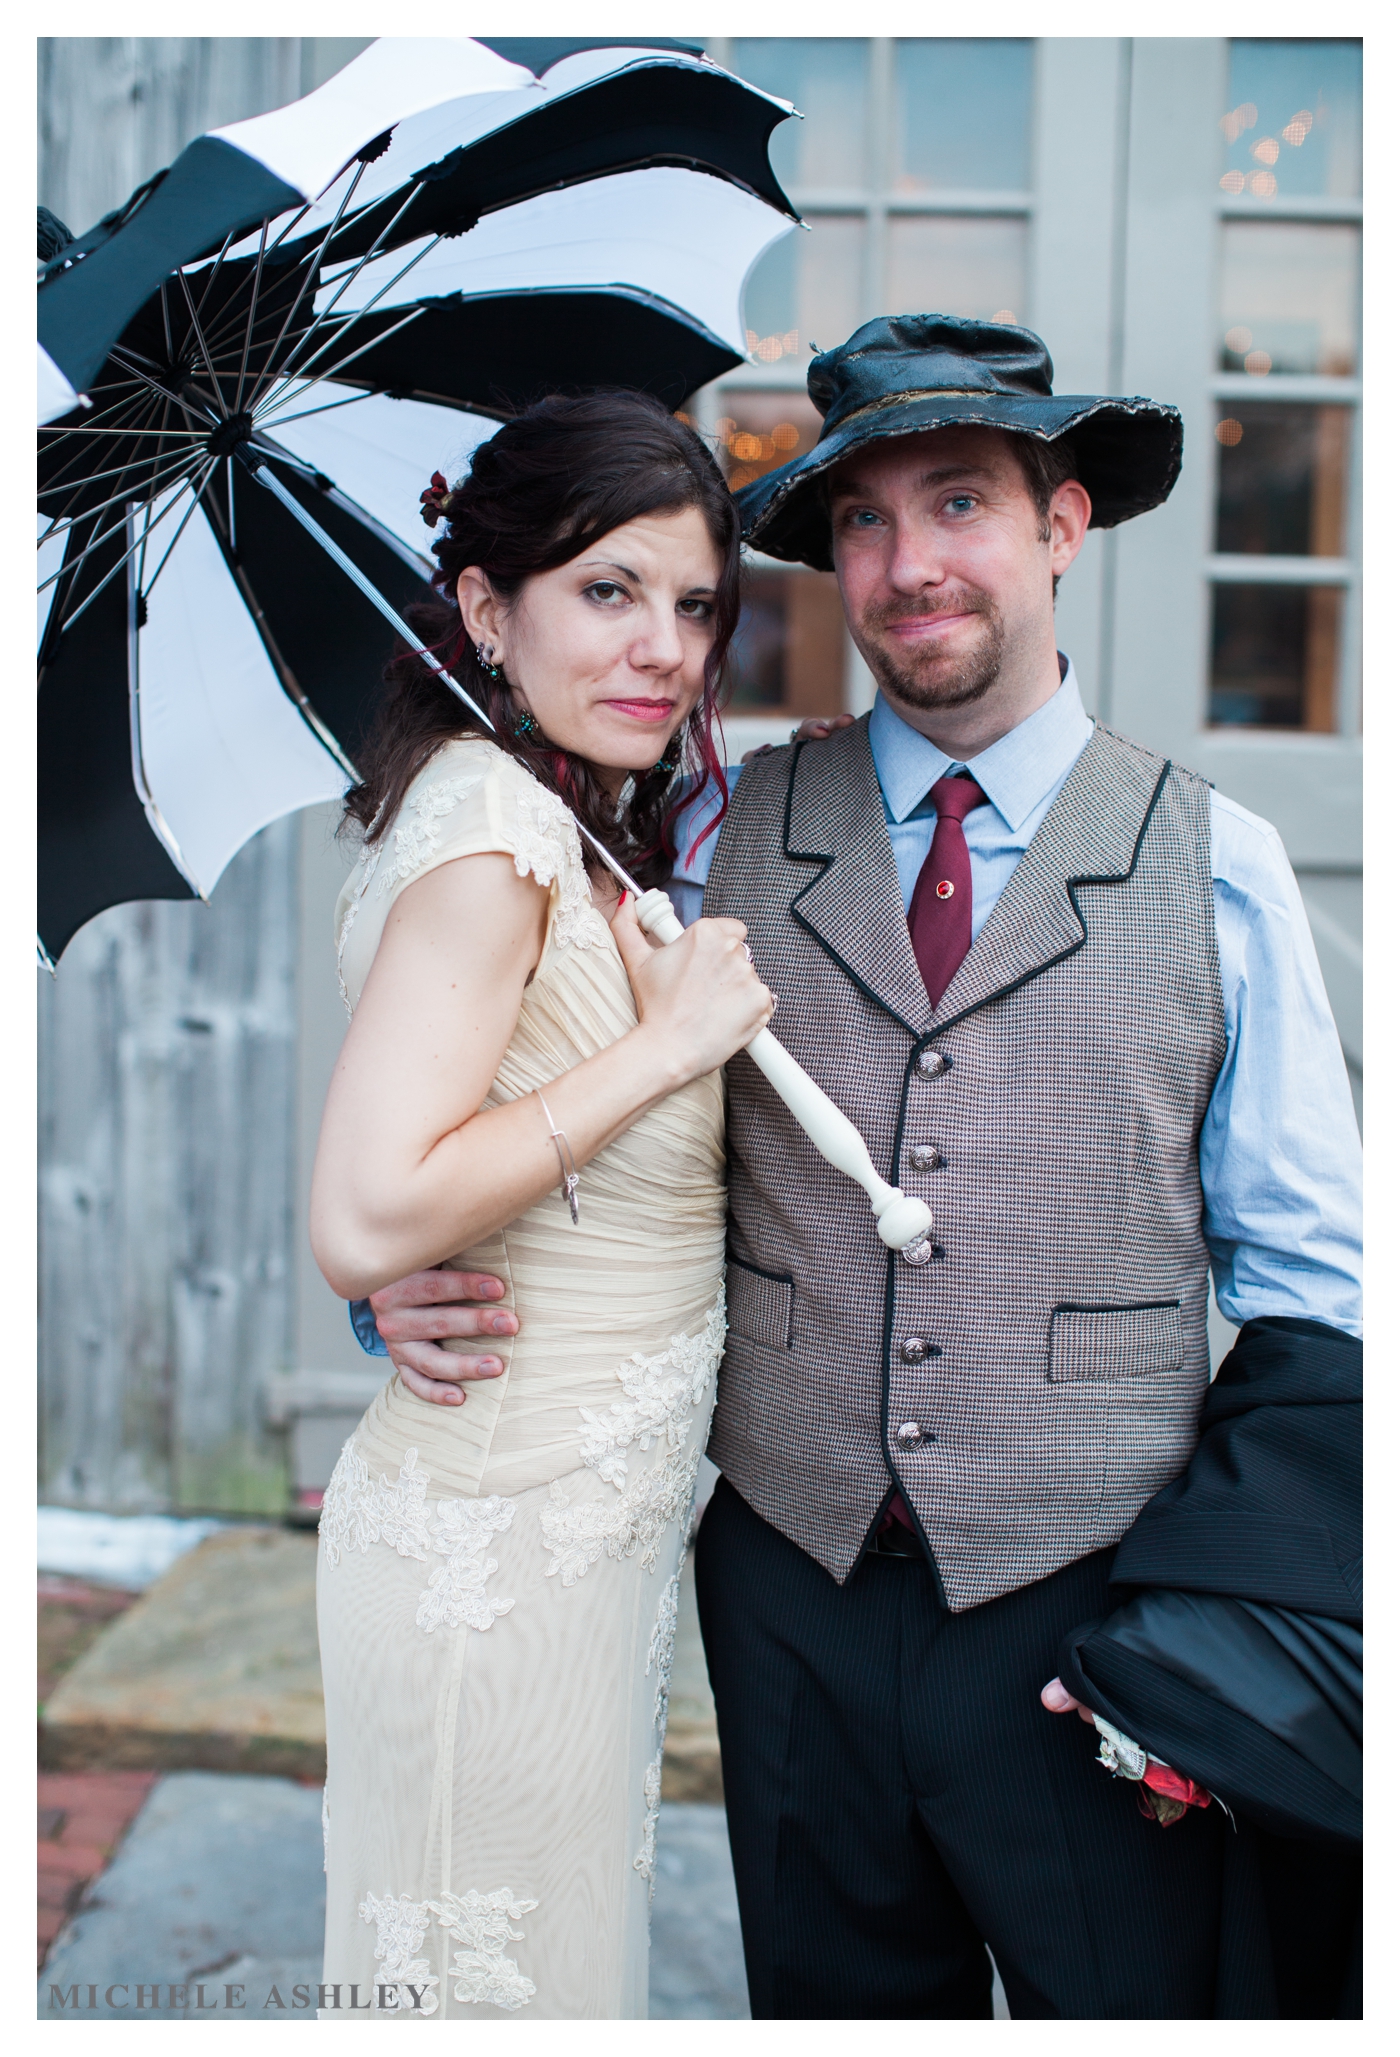 Salem Cross Inn Wedding | DIY Wedding | Kat + Evan | Michele Ashley Photography 28